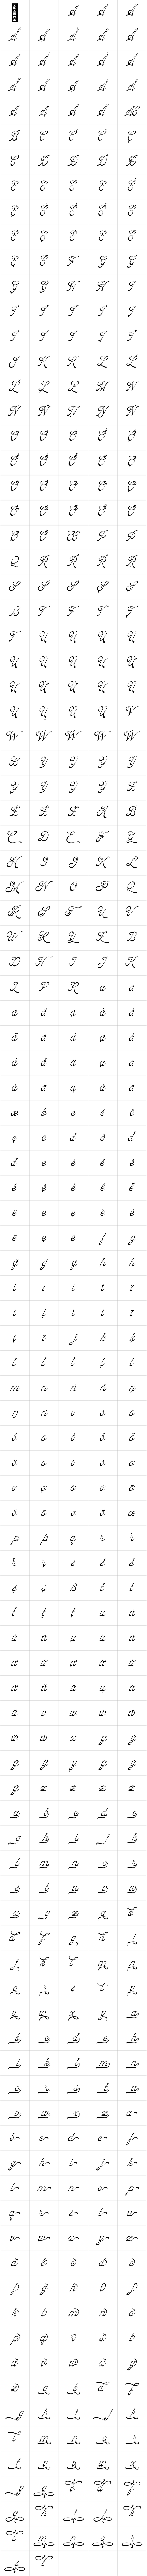 Hulahoy Typeface Regular image